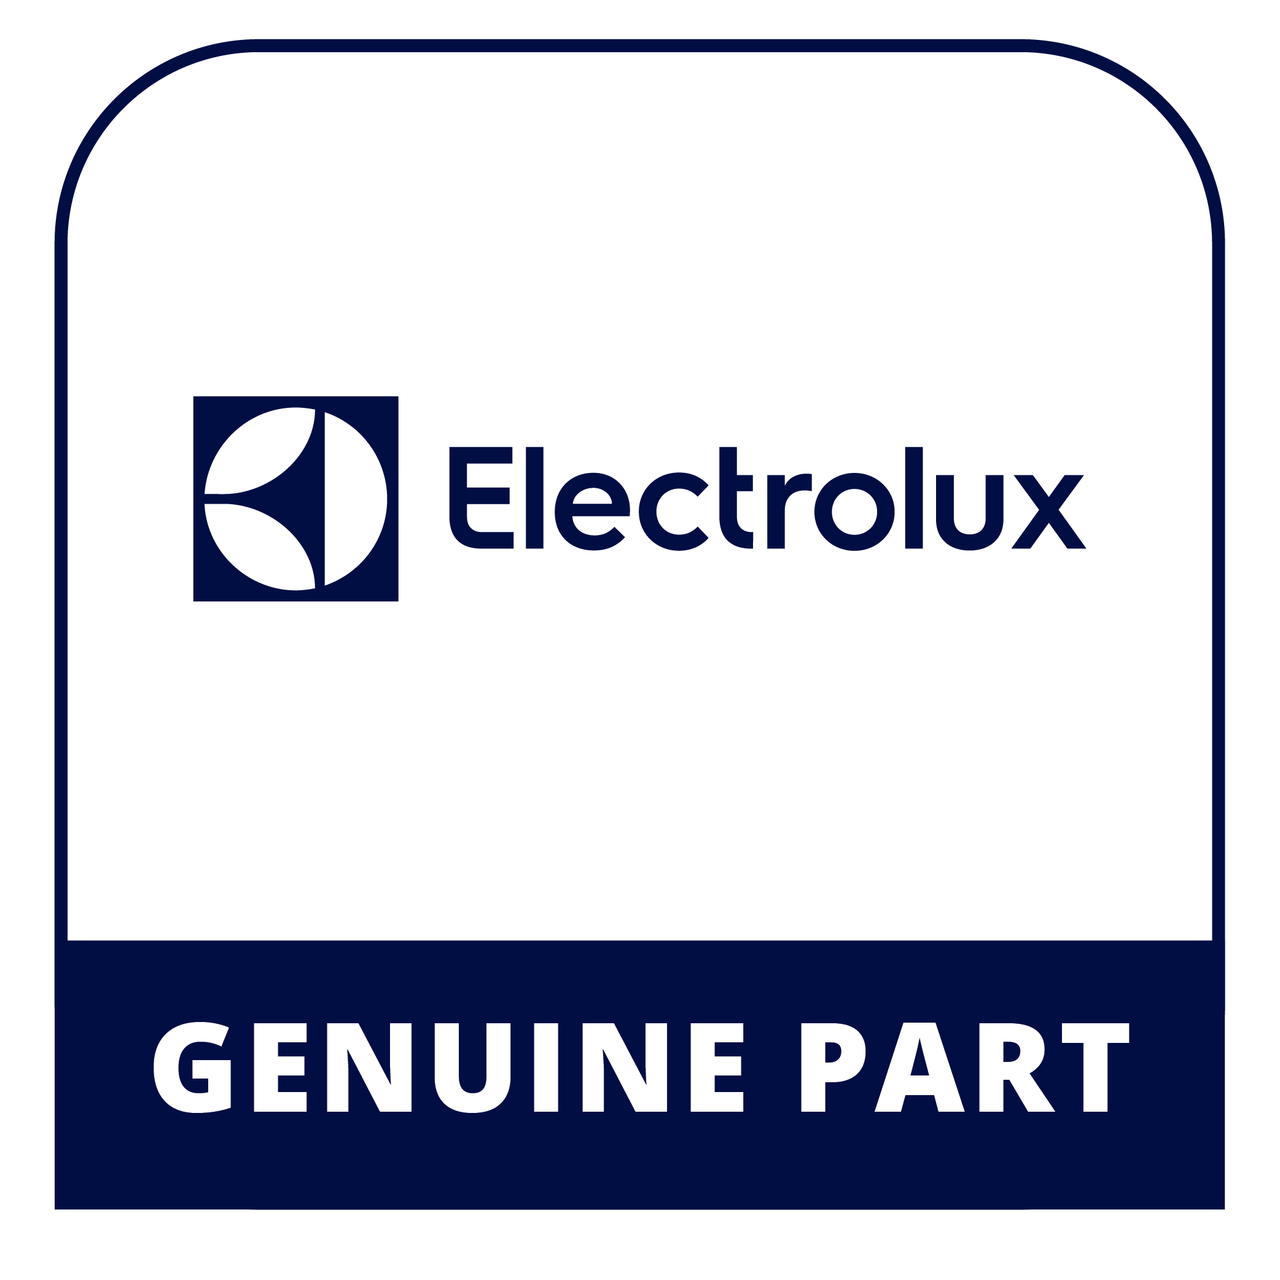 Frigidaire - Electrolux 405549276 Orifice Set - Genuine Electrolux Part